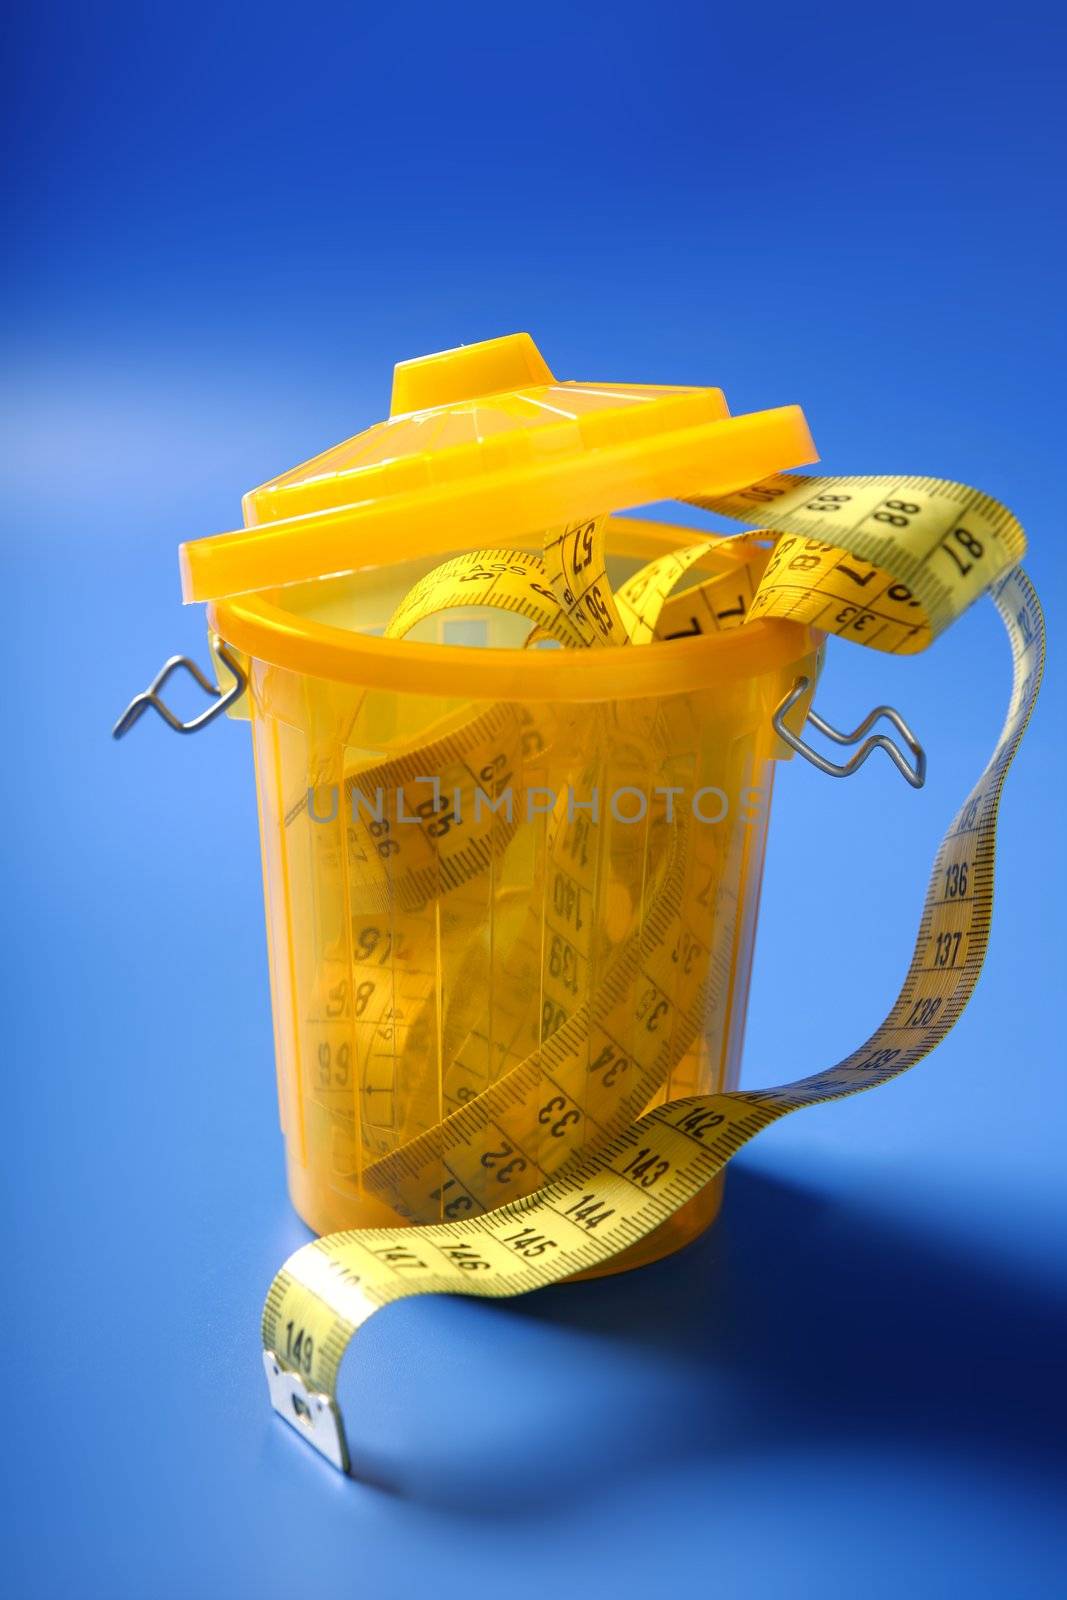 Centimeter tape meter on the trash, end of diet care metaphor